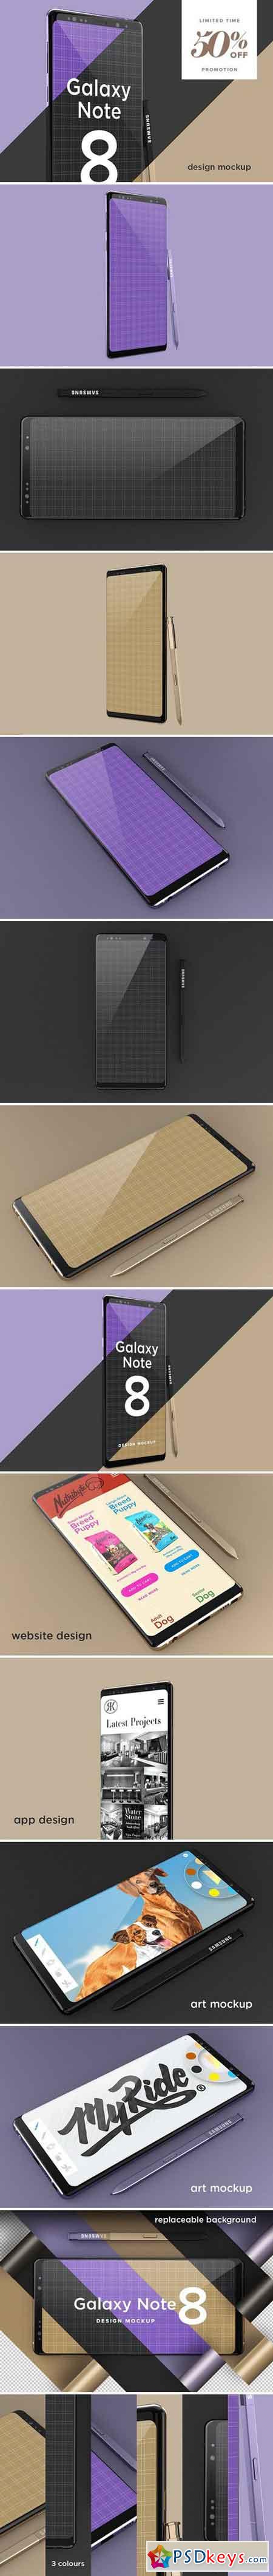 Samsung Galaxy Note 8 Design Mockup 1428437